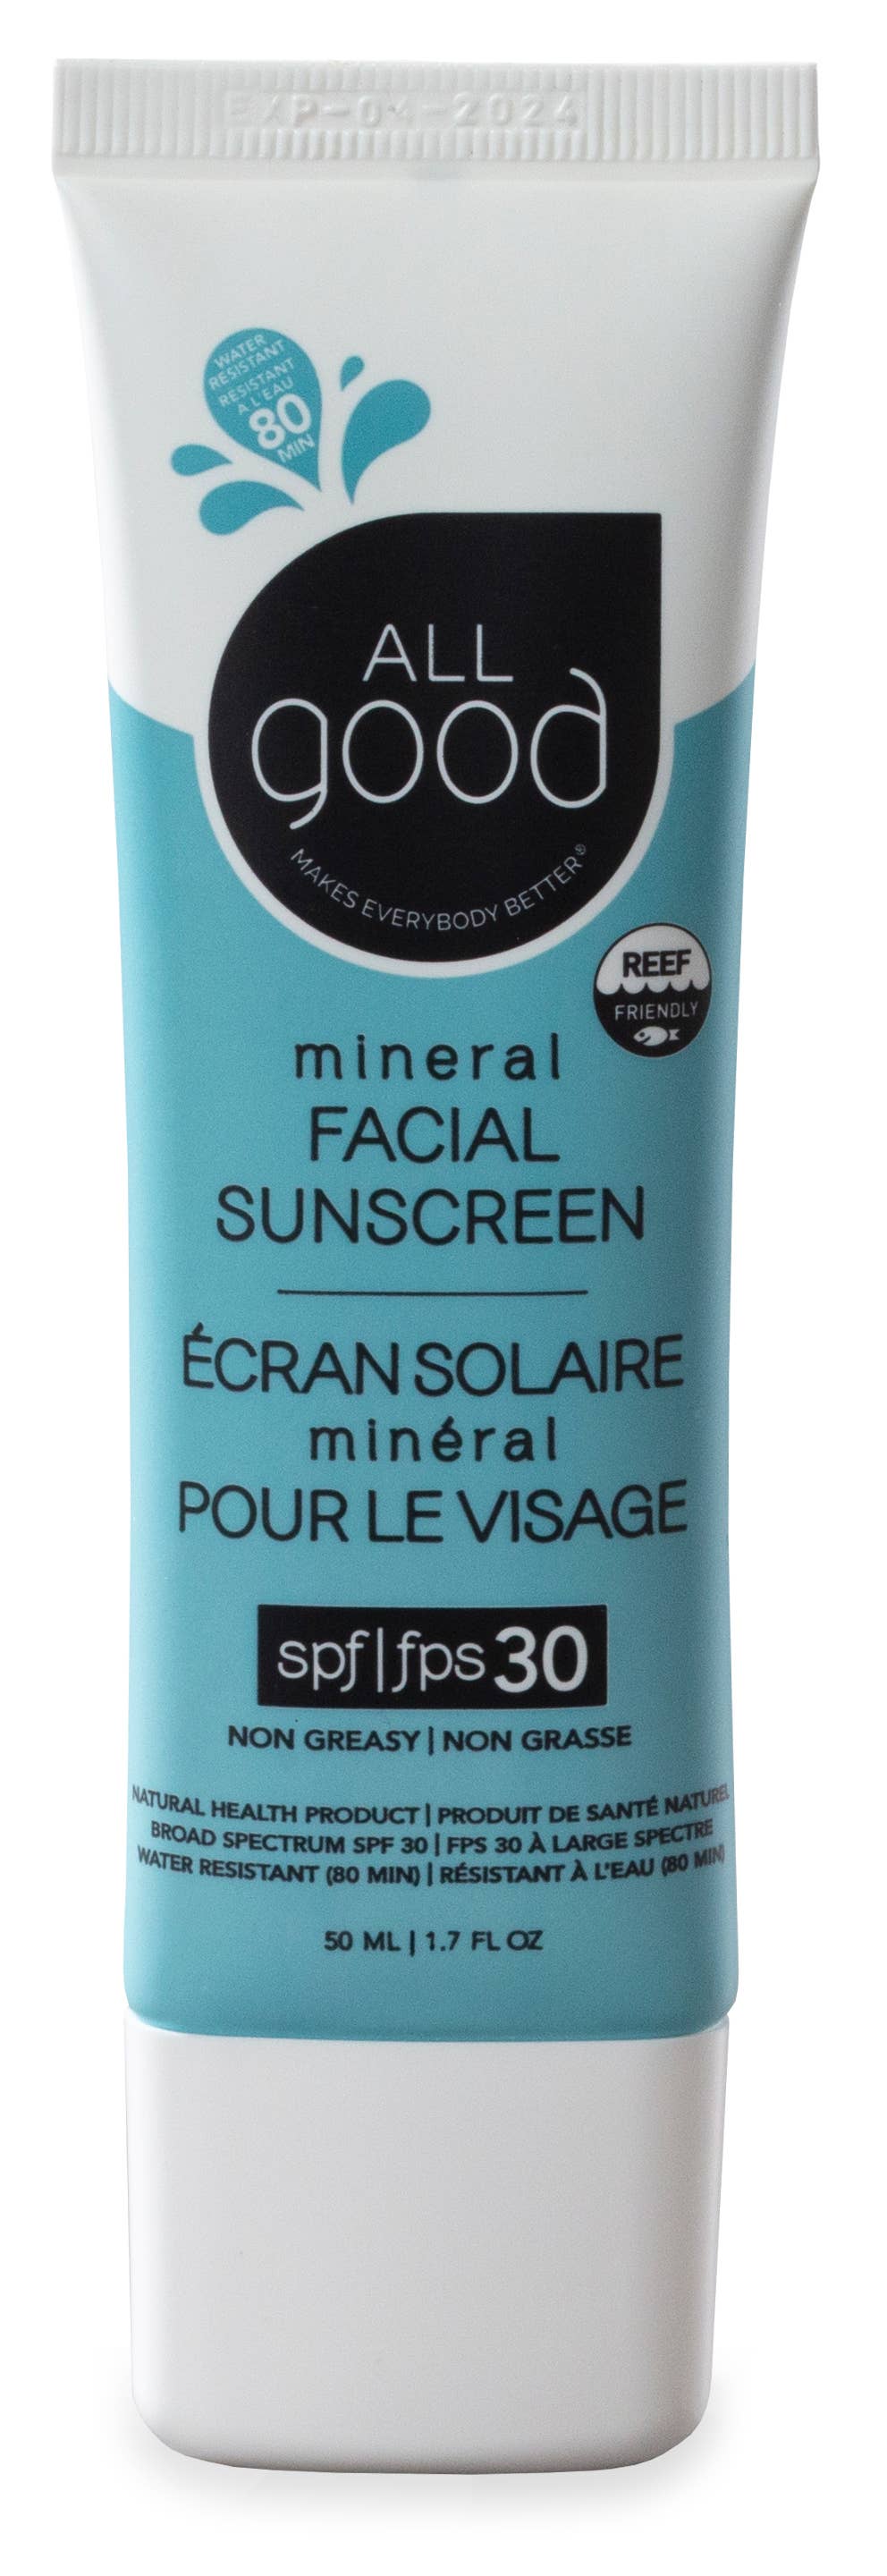 Daily Facial Mineral Sunscreen & Moisturizer SPF 30